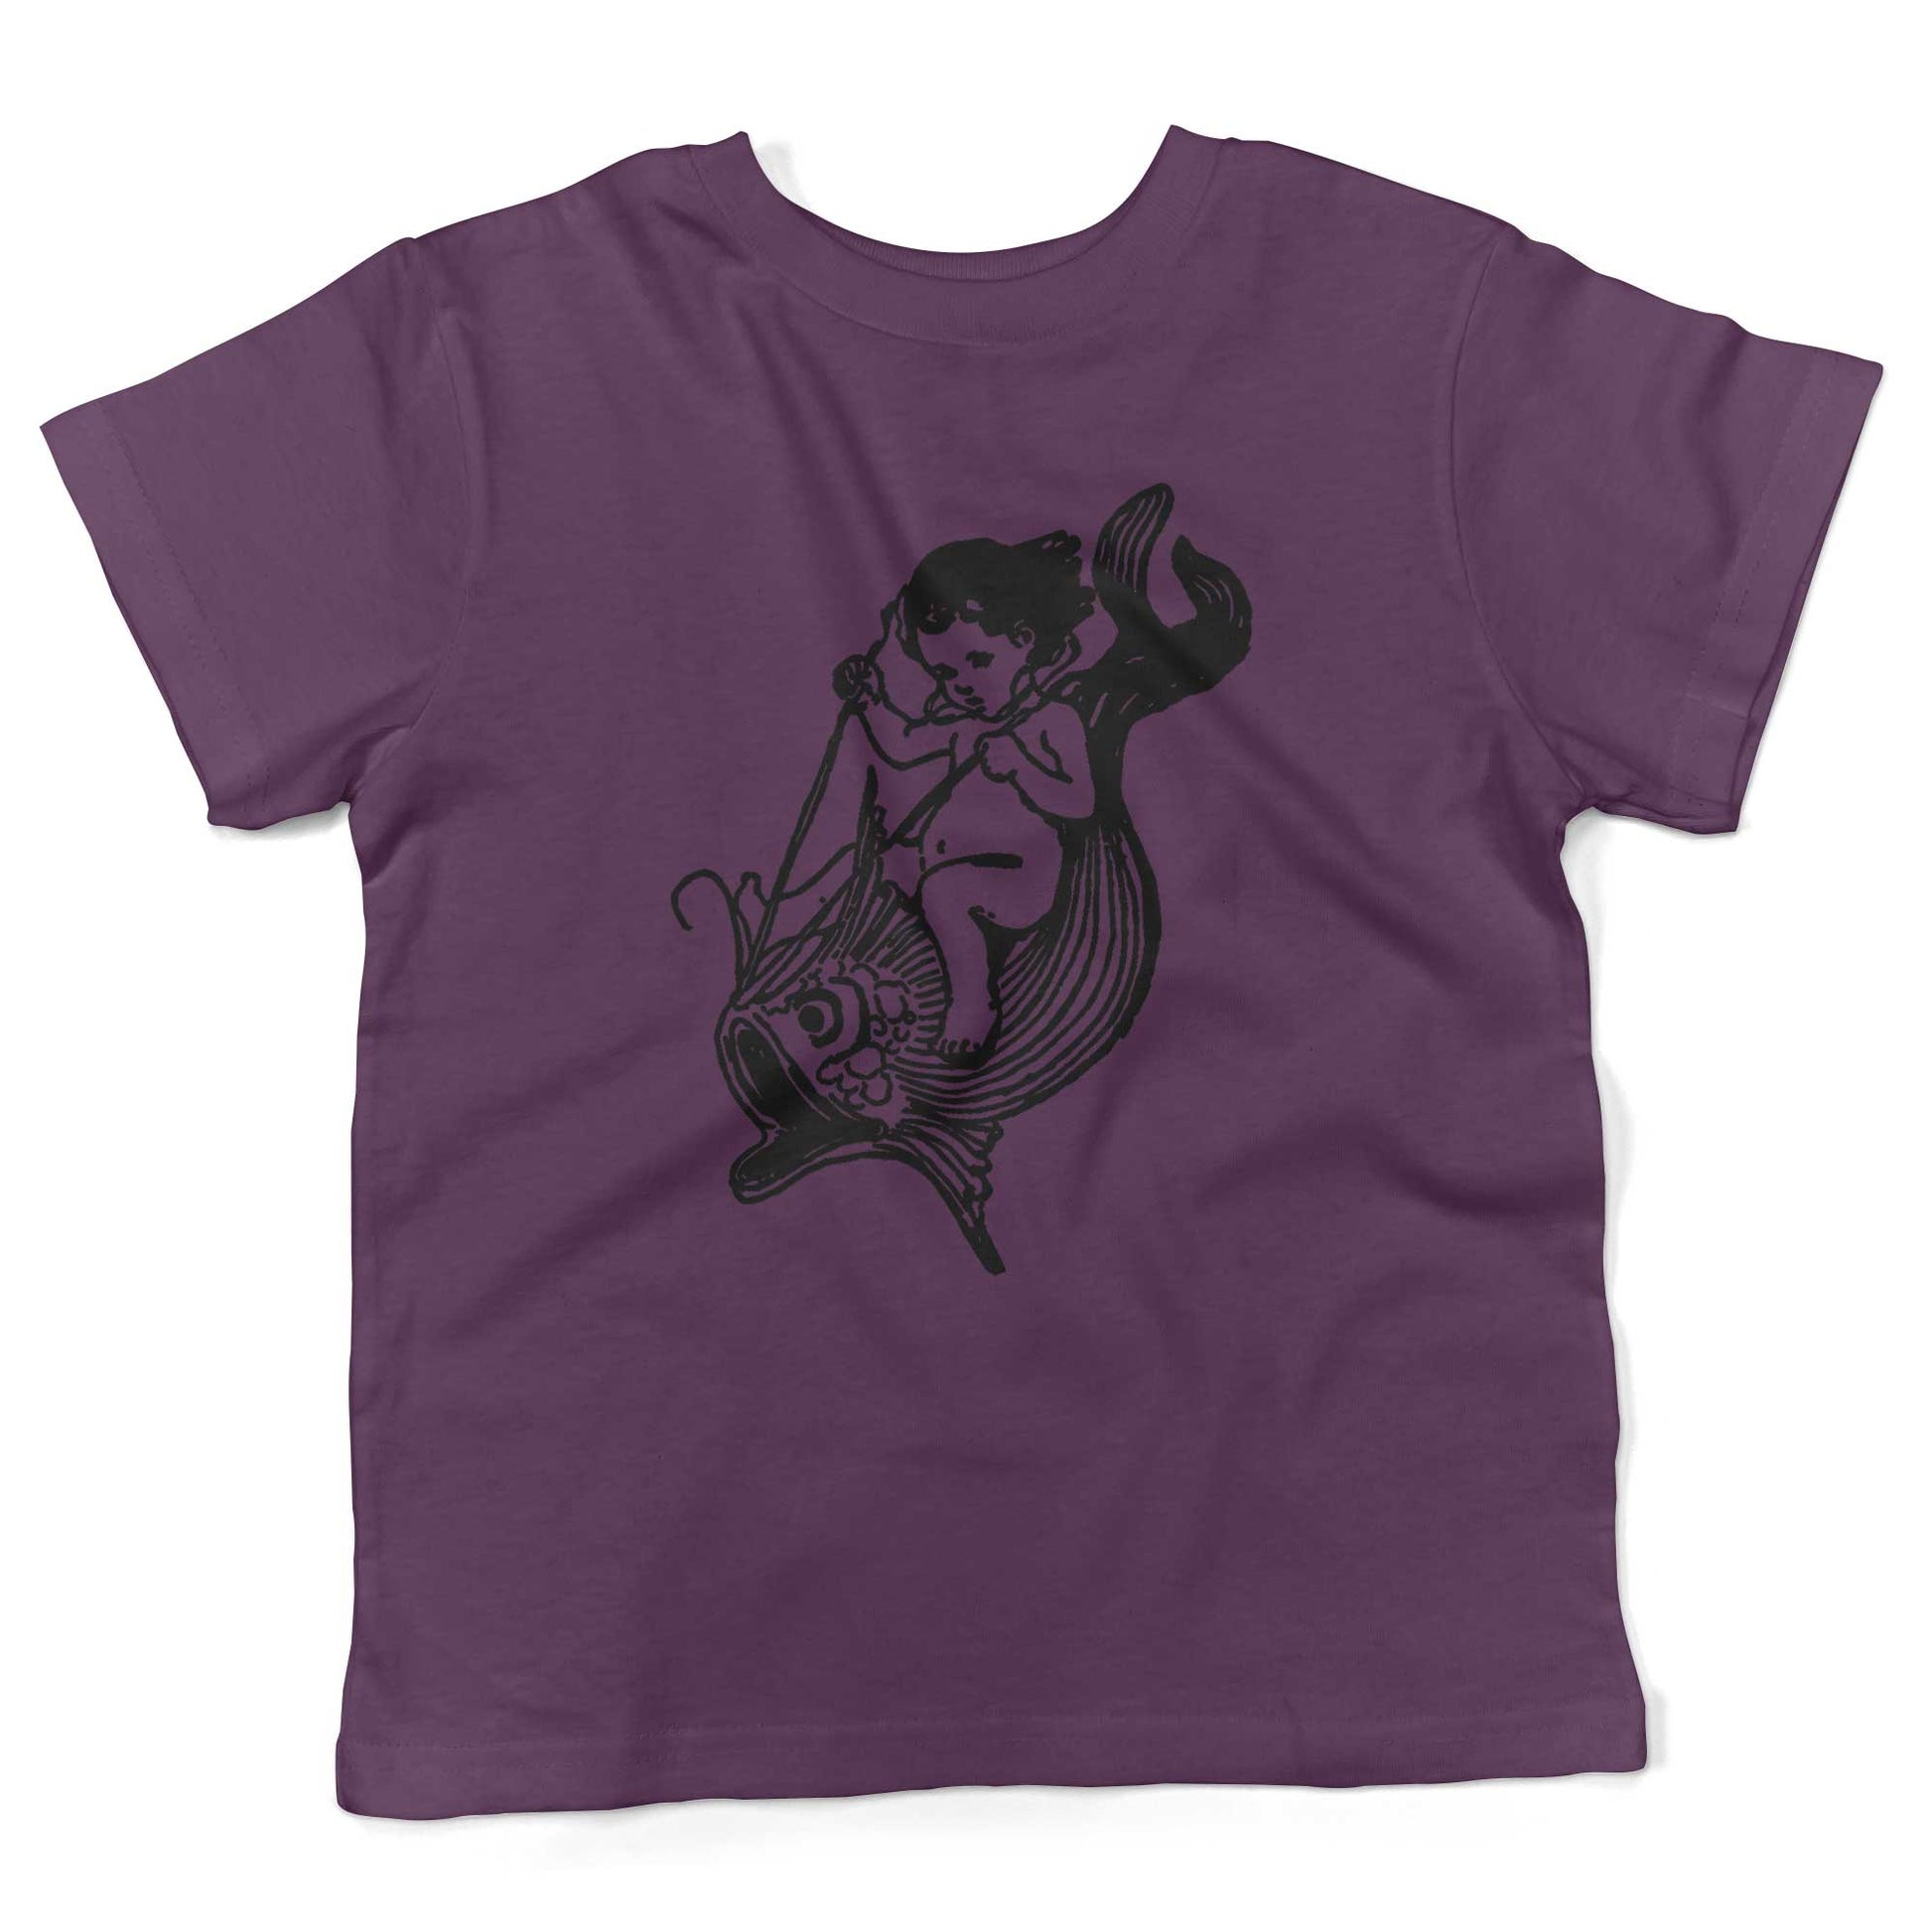 Water Baby Riding A Giant Fish Toddler Shirt-Organic Purple-2T